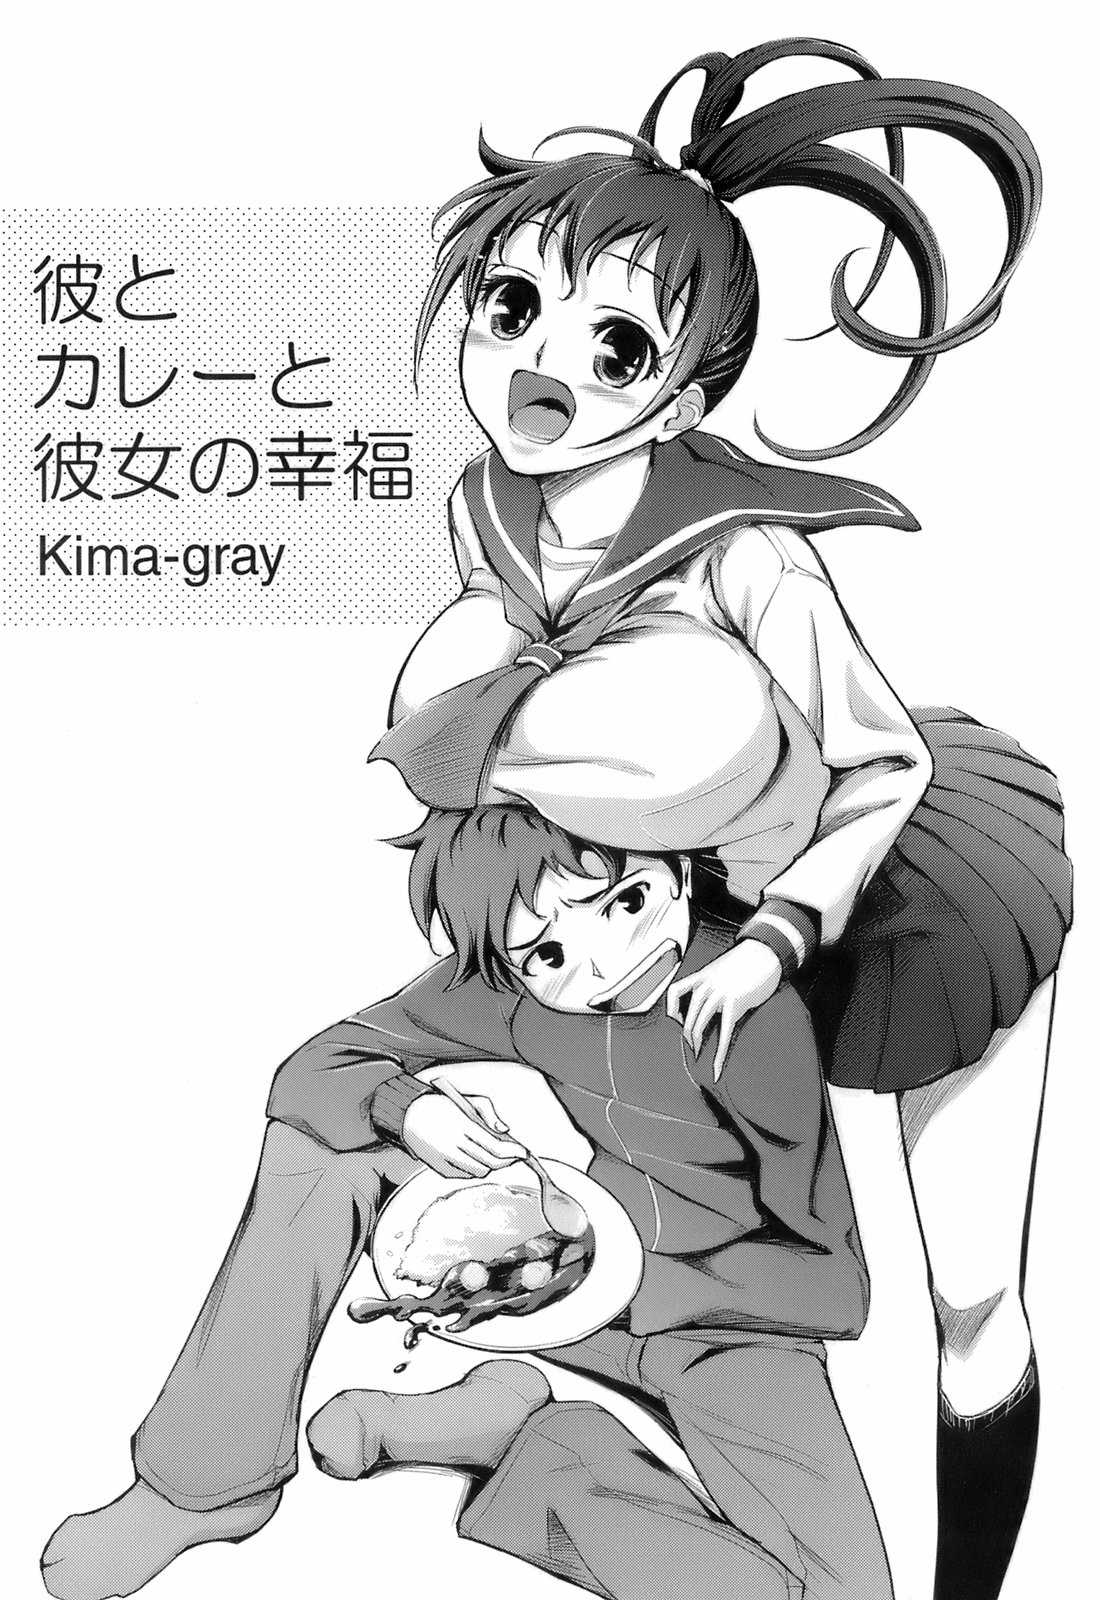 [Kima-gray] Kimagure 